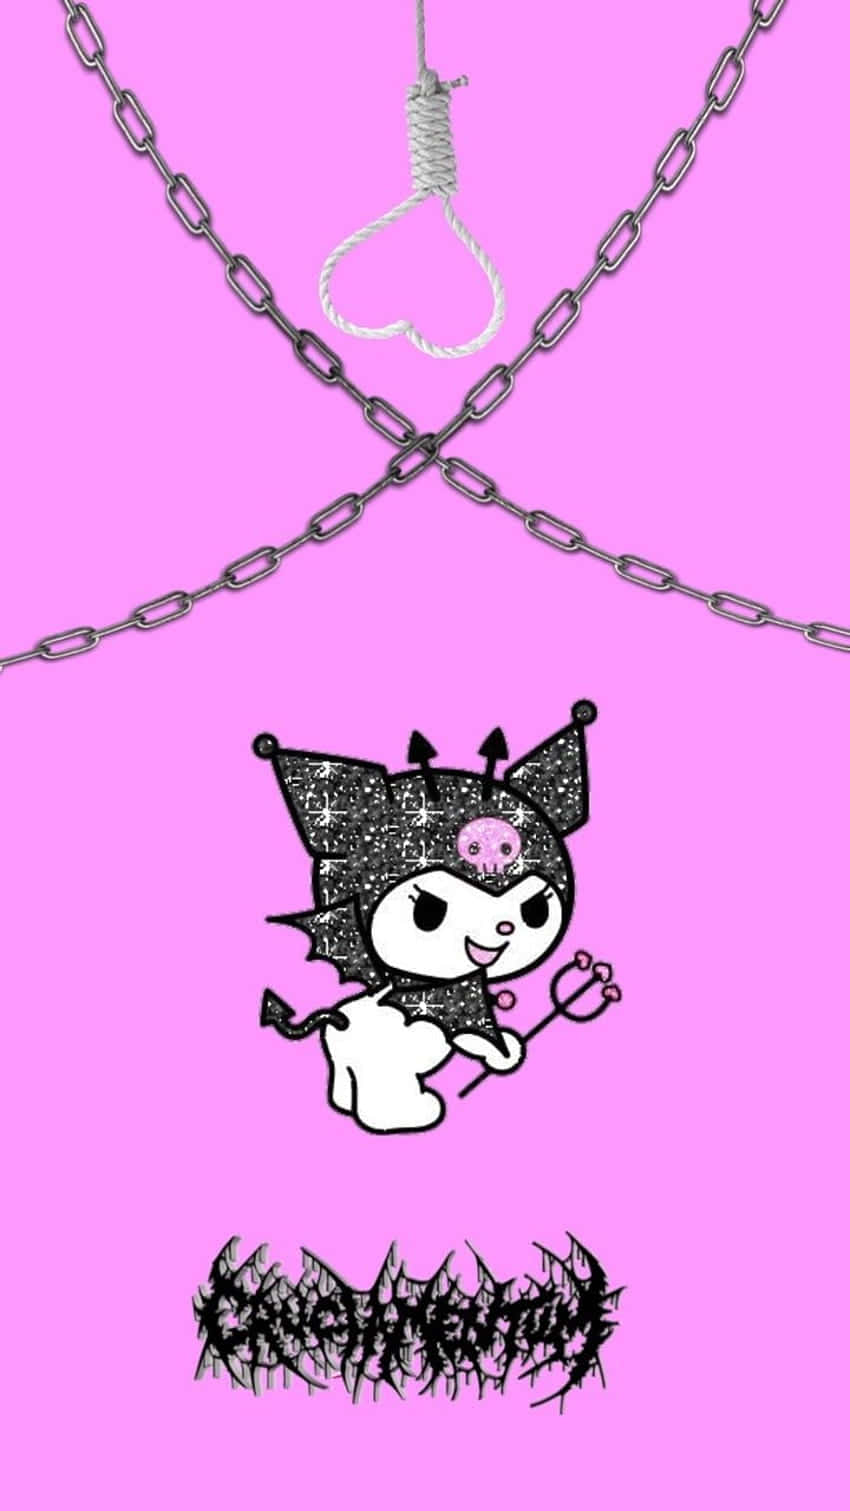 Unfondo Rosa Con Un Gato Colgando De Cadenas. Fondo de pantalla